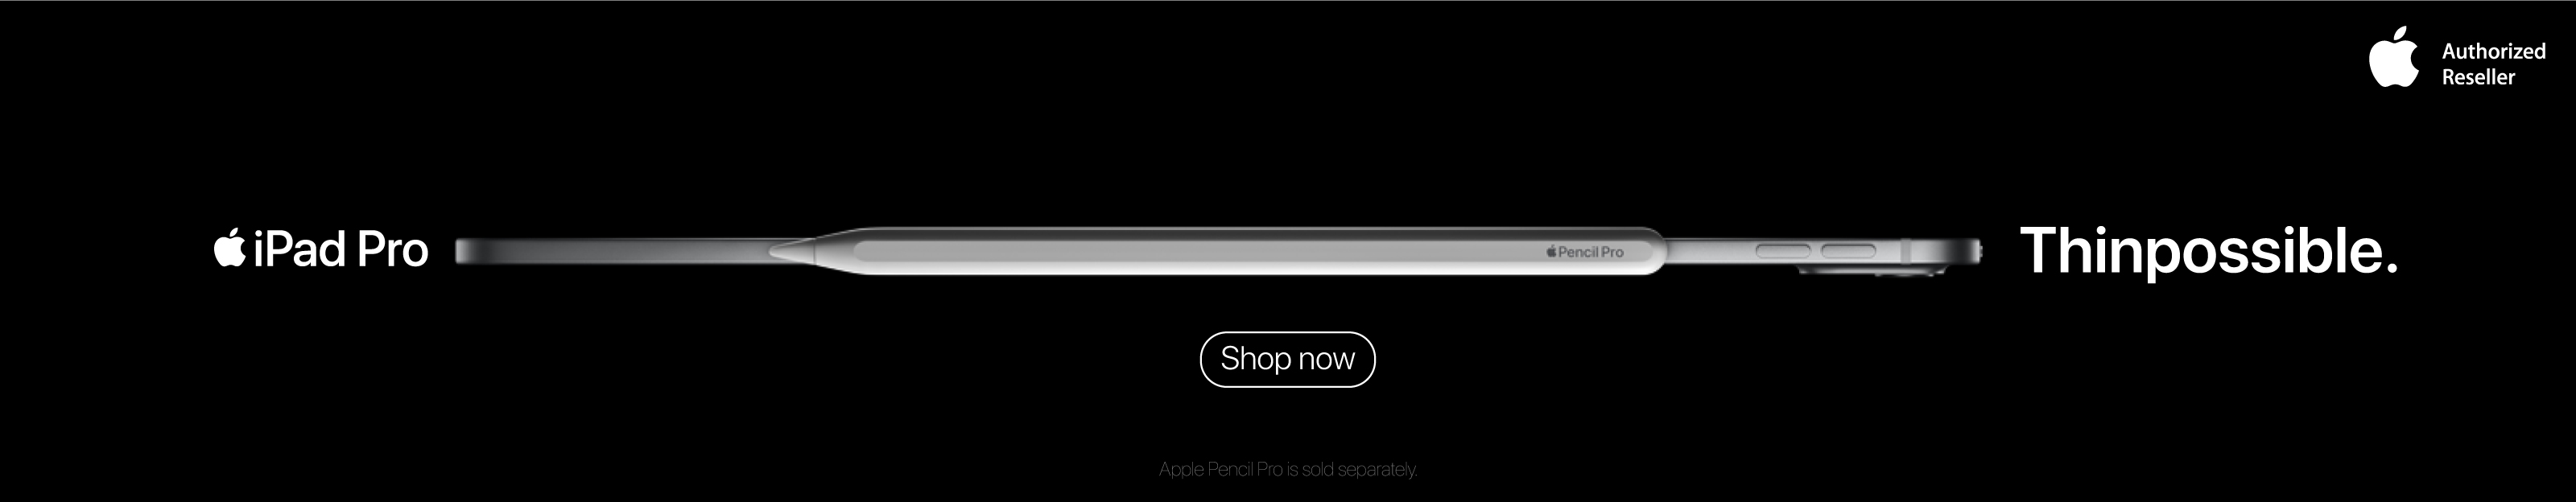 iPad Pro Shop Now 24 (Web)